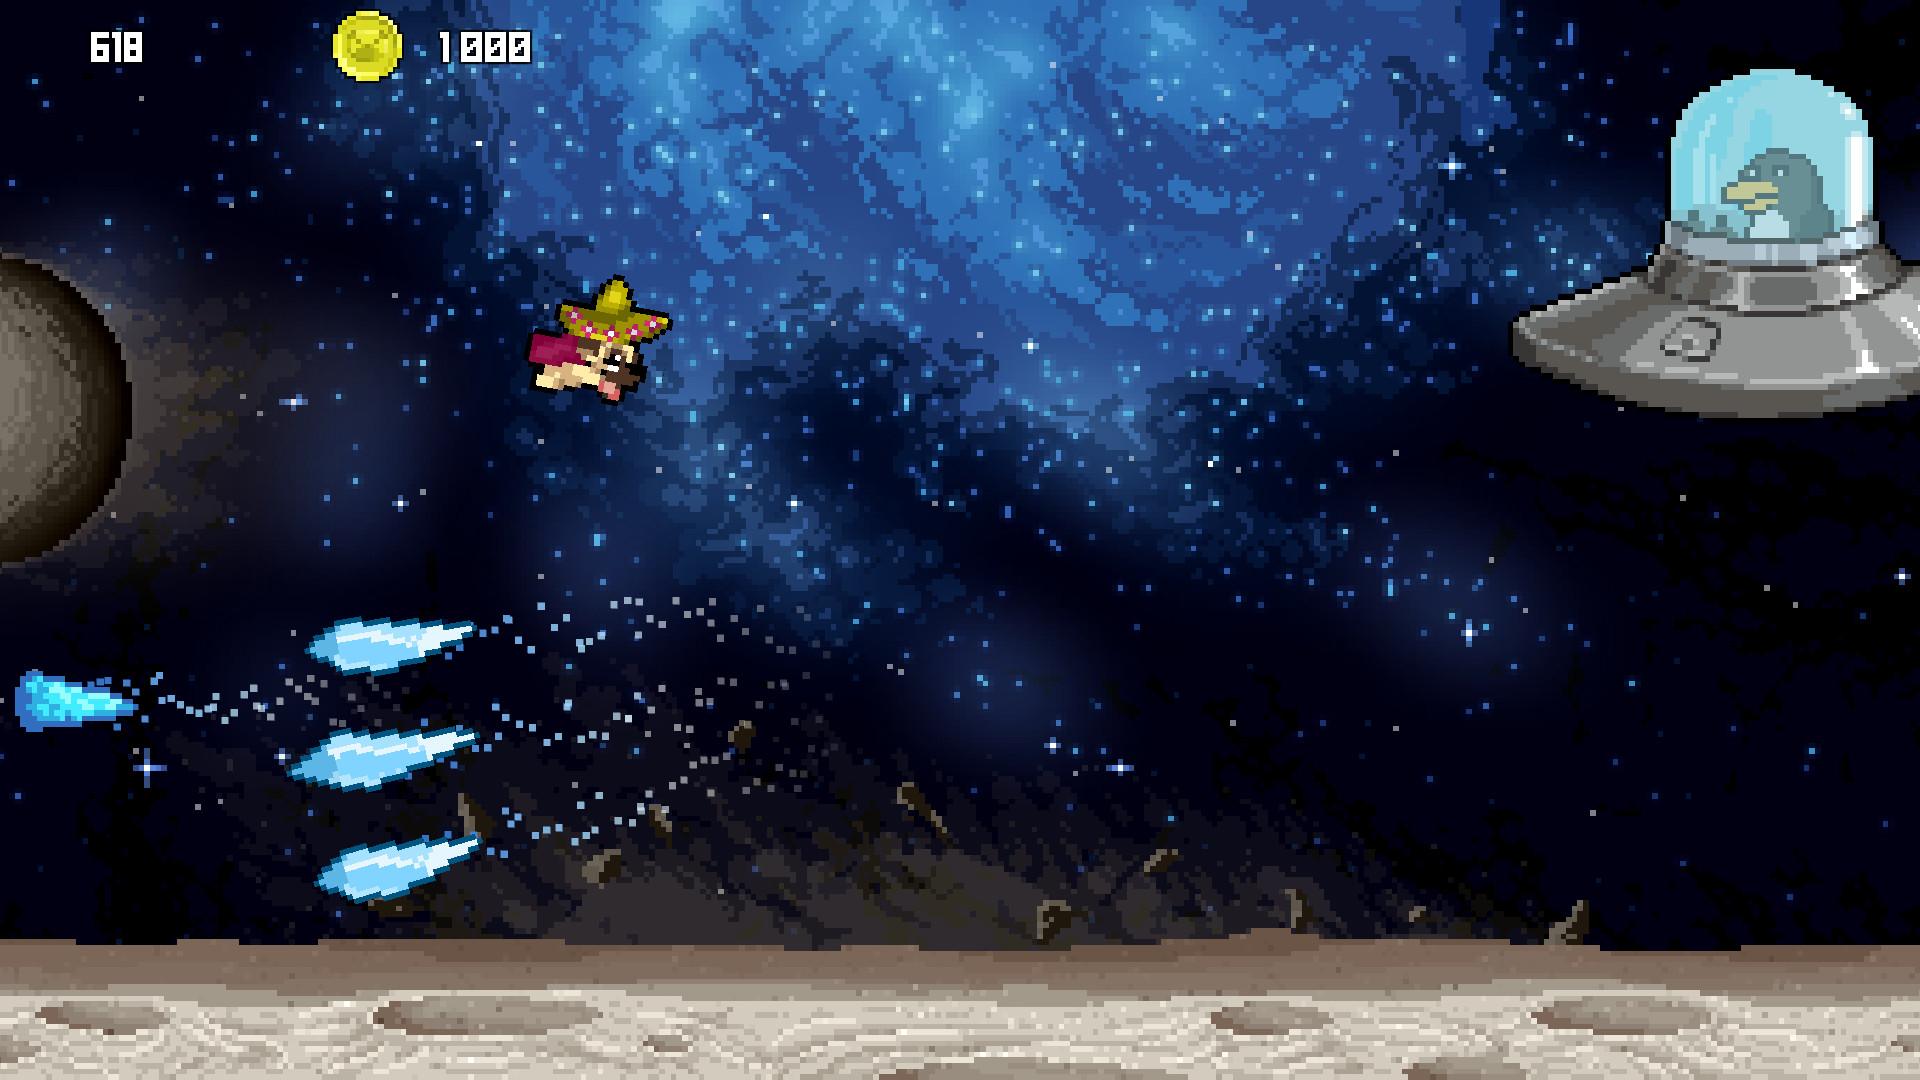 Screenshot №1 from game Super Mega Neo Pug